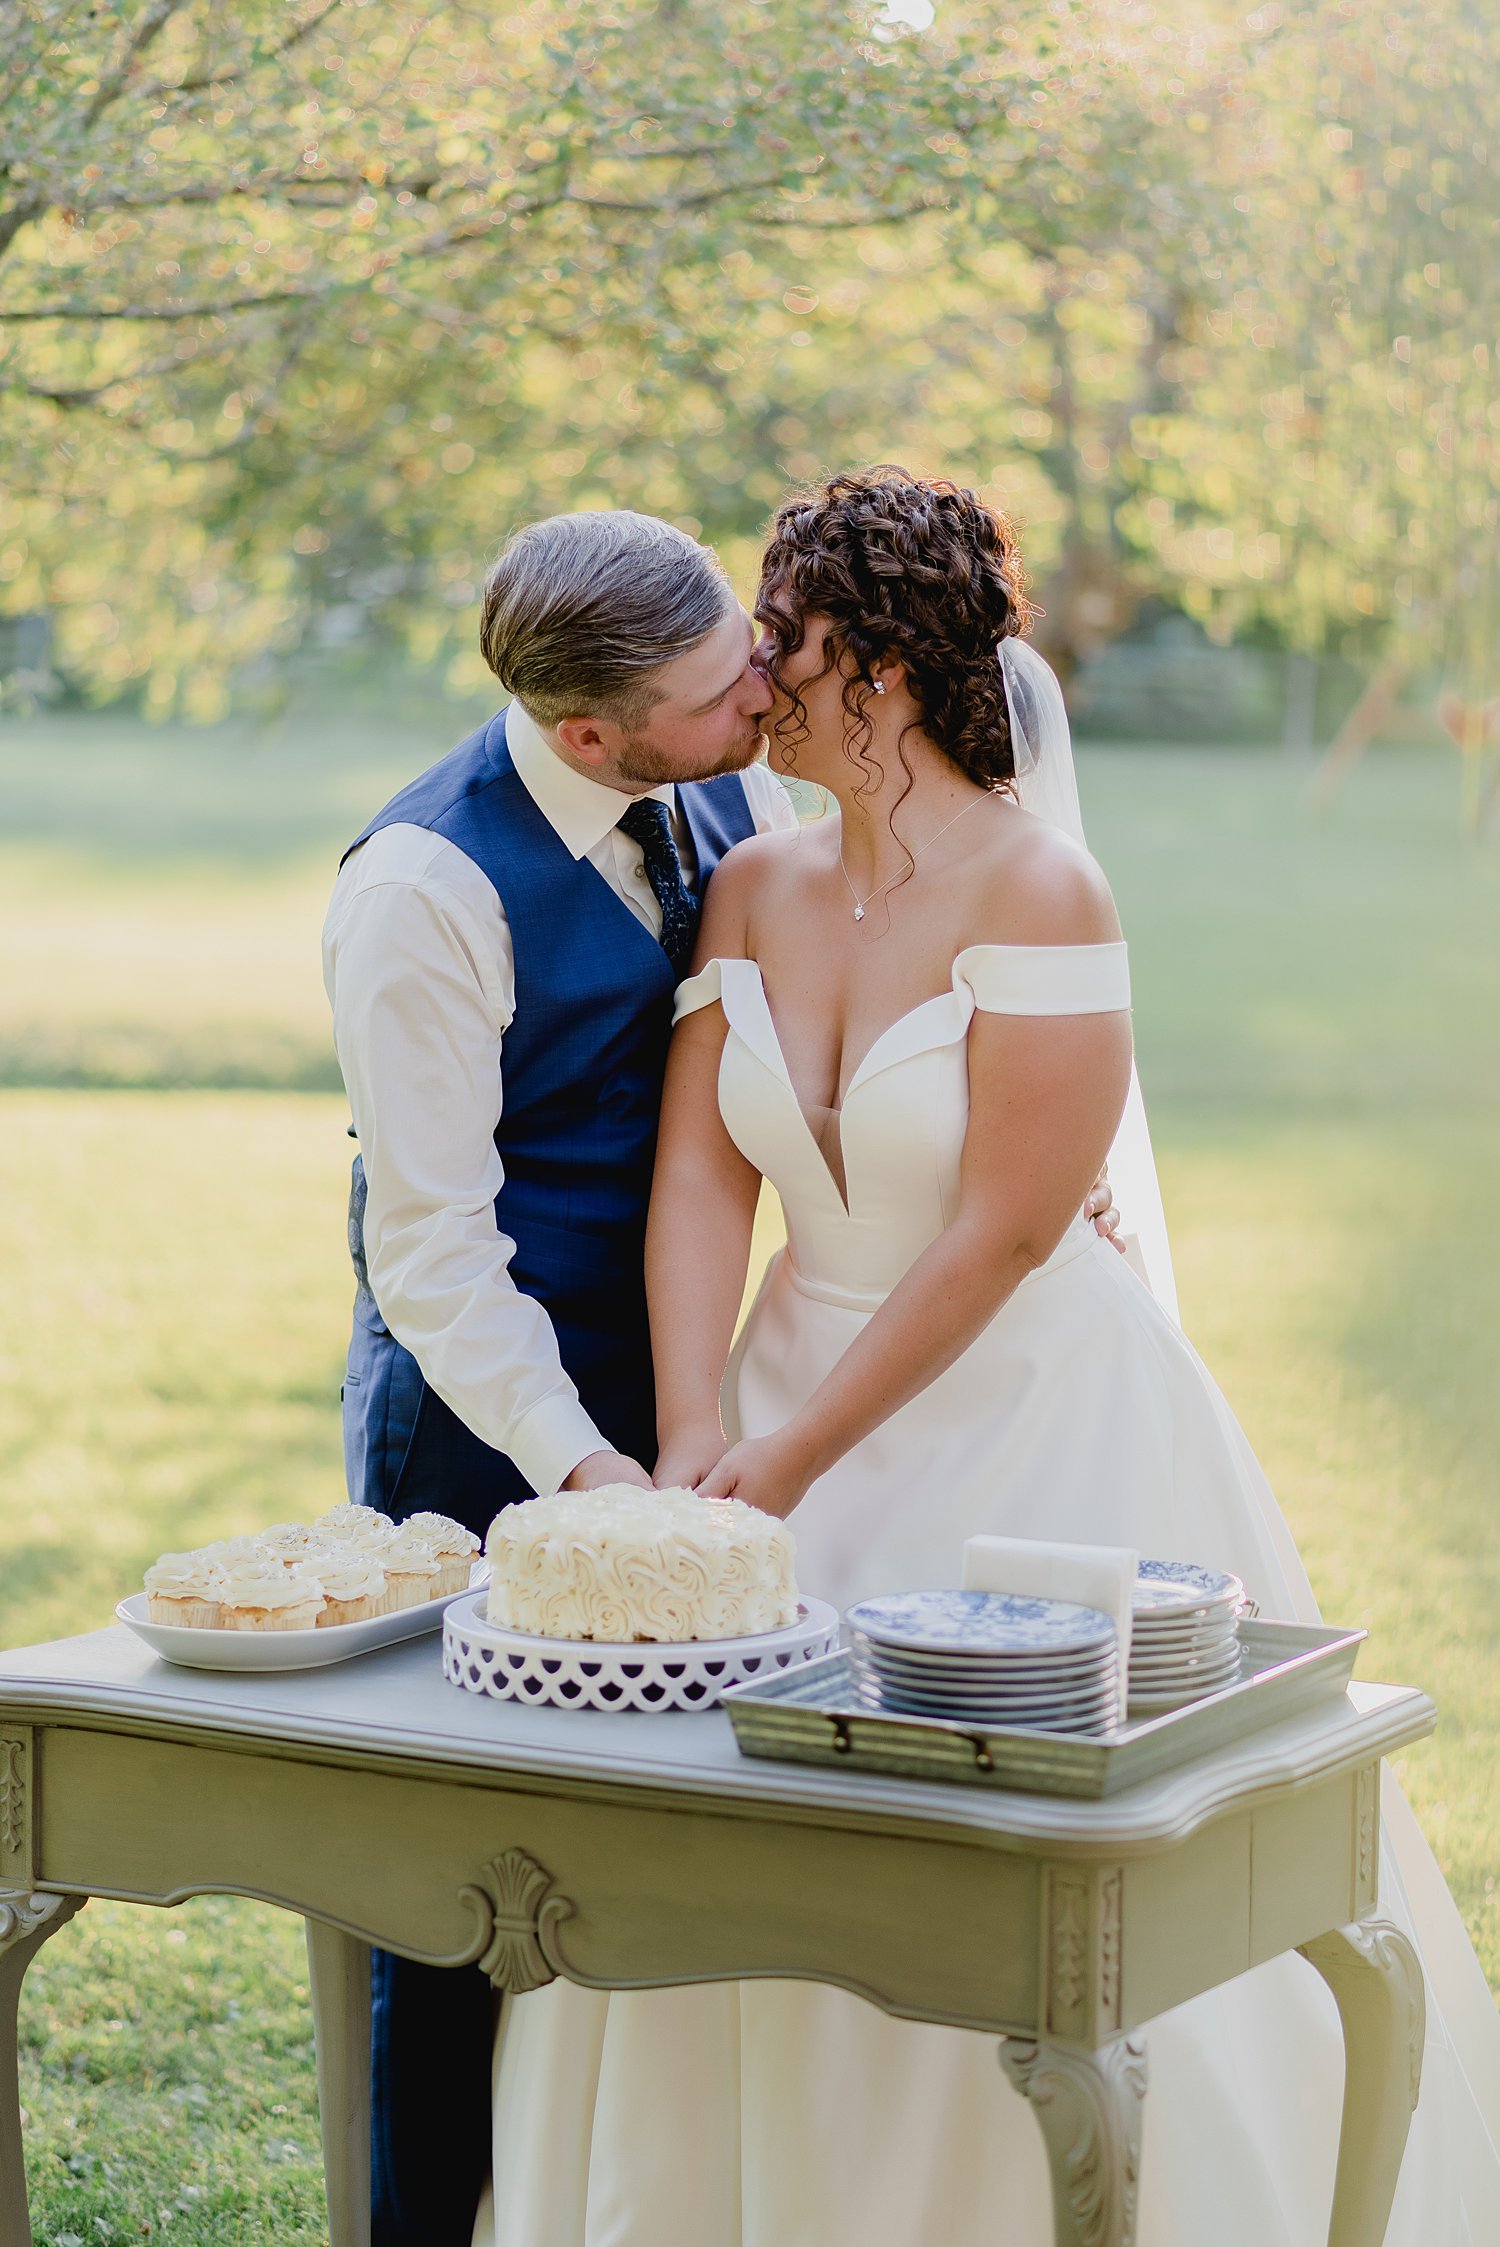 Elegant Summer Backyard Tented Wedding in Sydenham, Ontario | Prince Edward County Wedding Photographer | Holly McMurter Photographs_0084.jpg